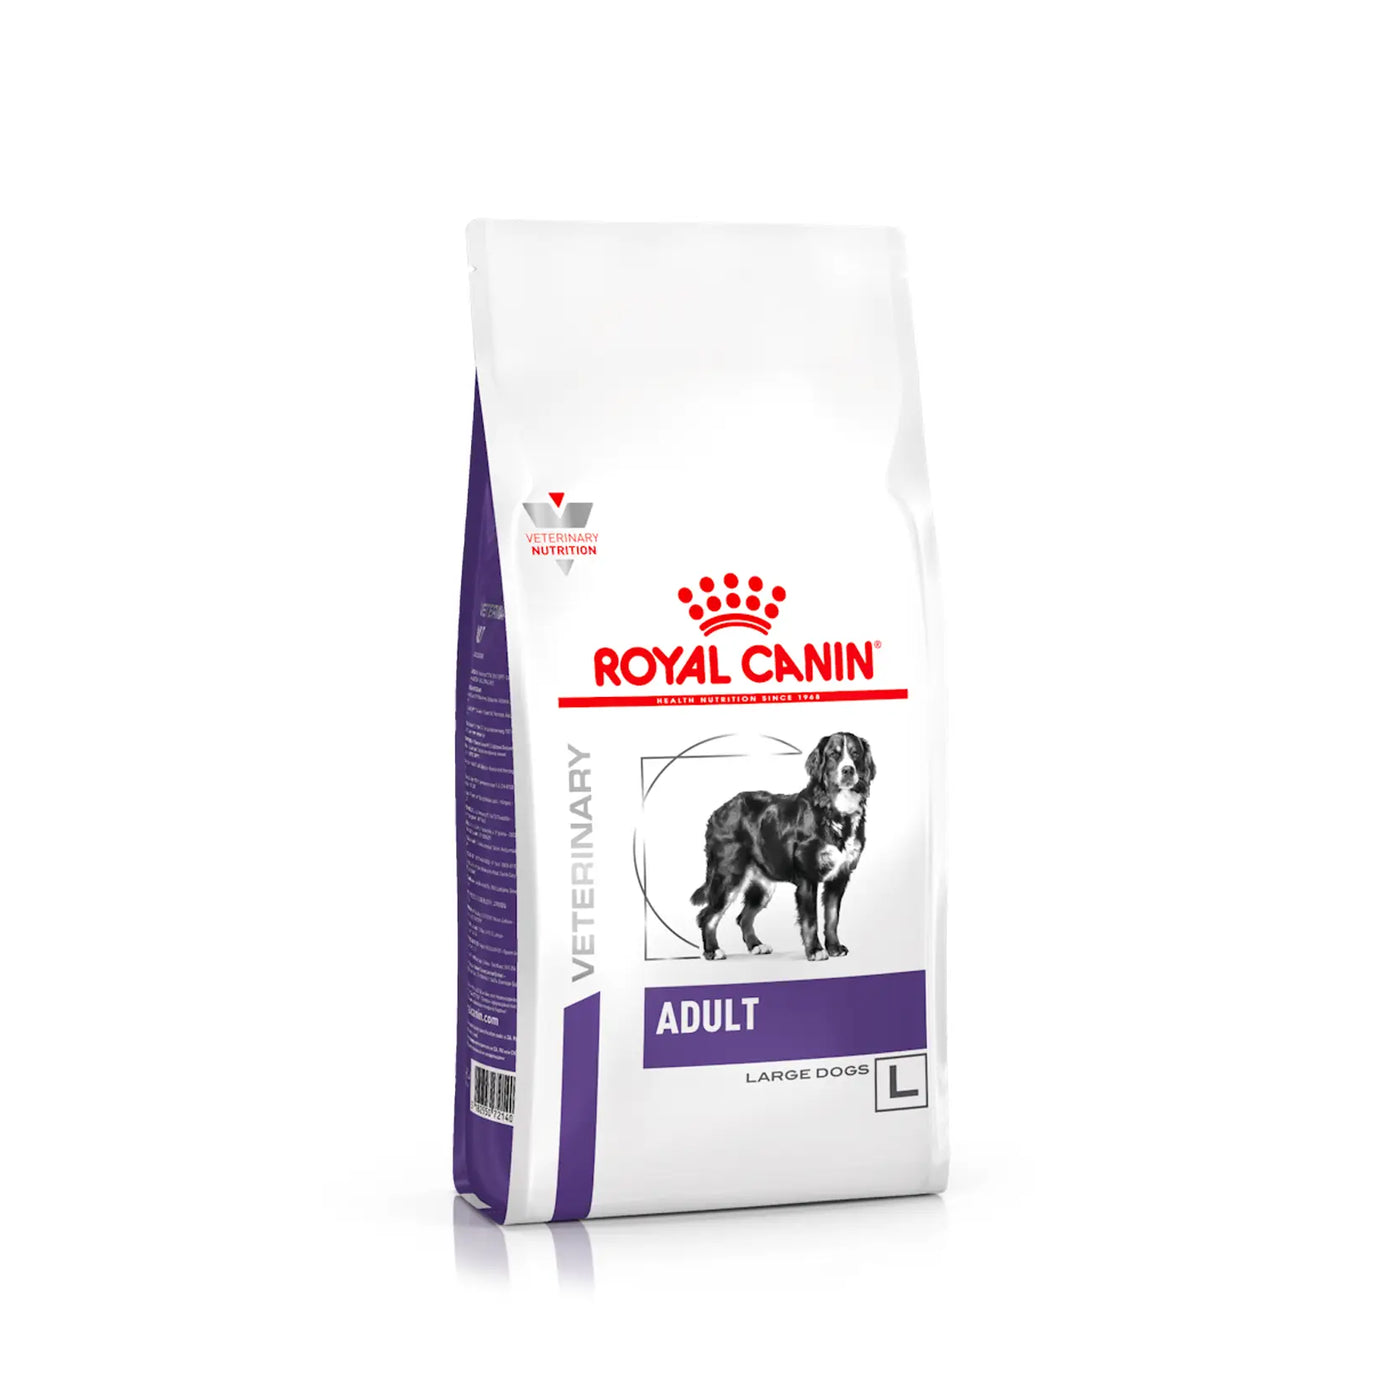 Royal Canin - Adult Large Dog 13kg